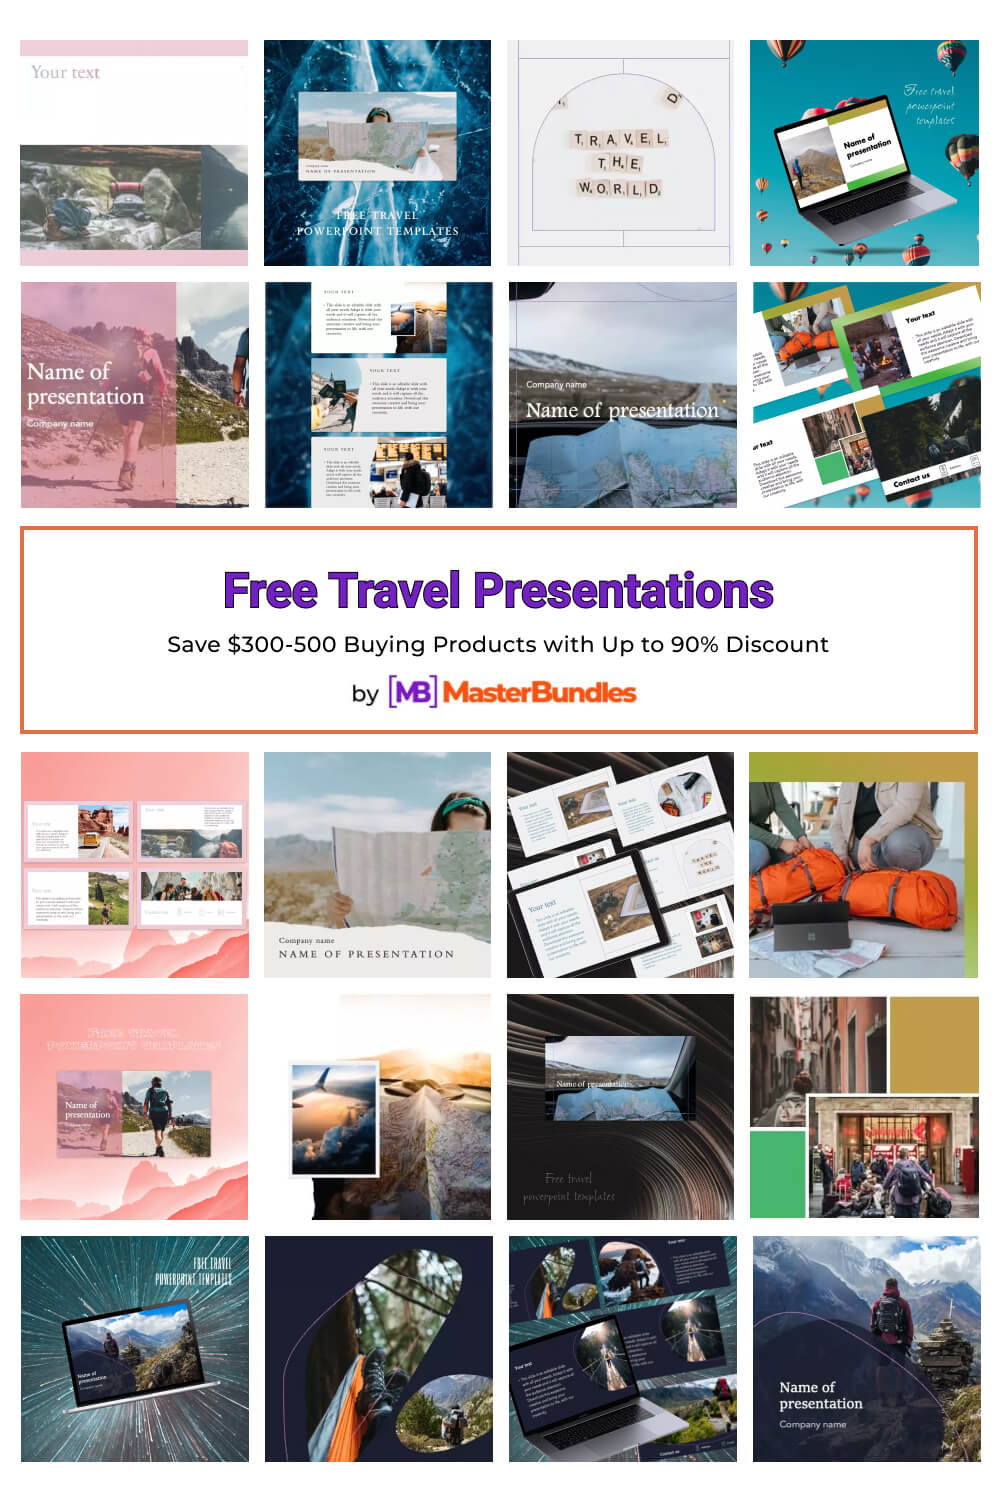 free travel presentations pinterest image.